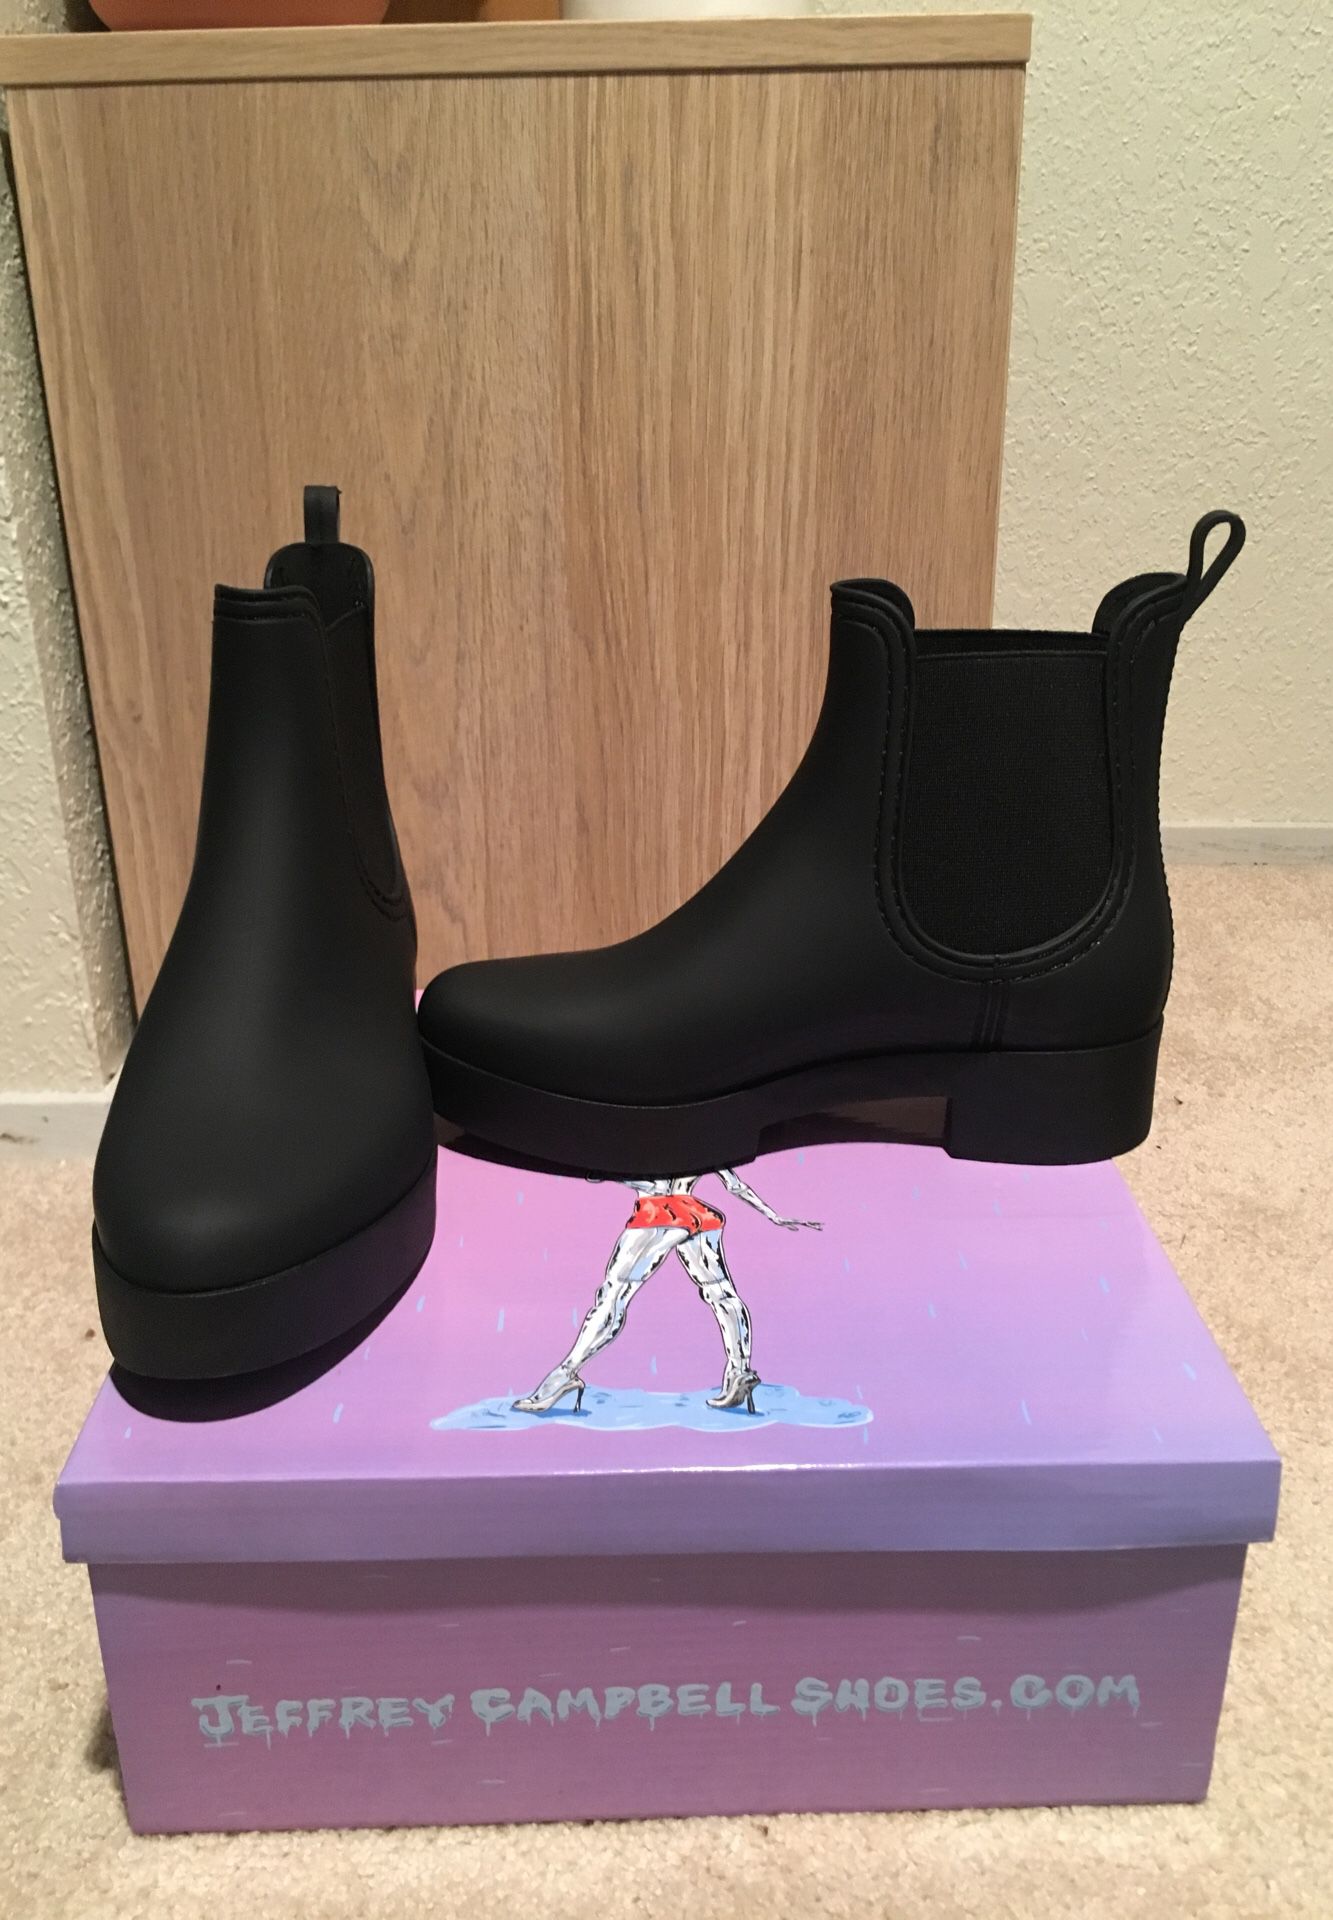 Jeffrey Campbell size 7 boot waterproof